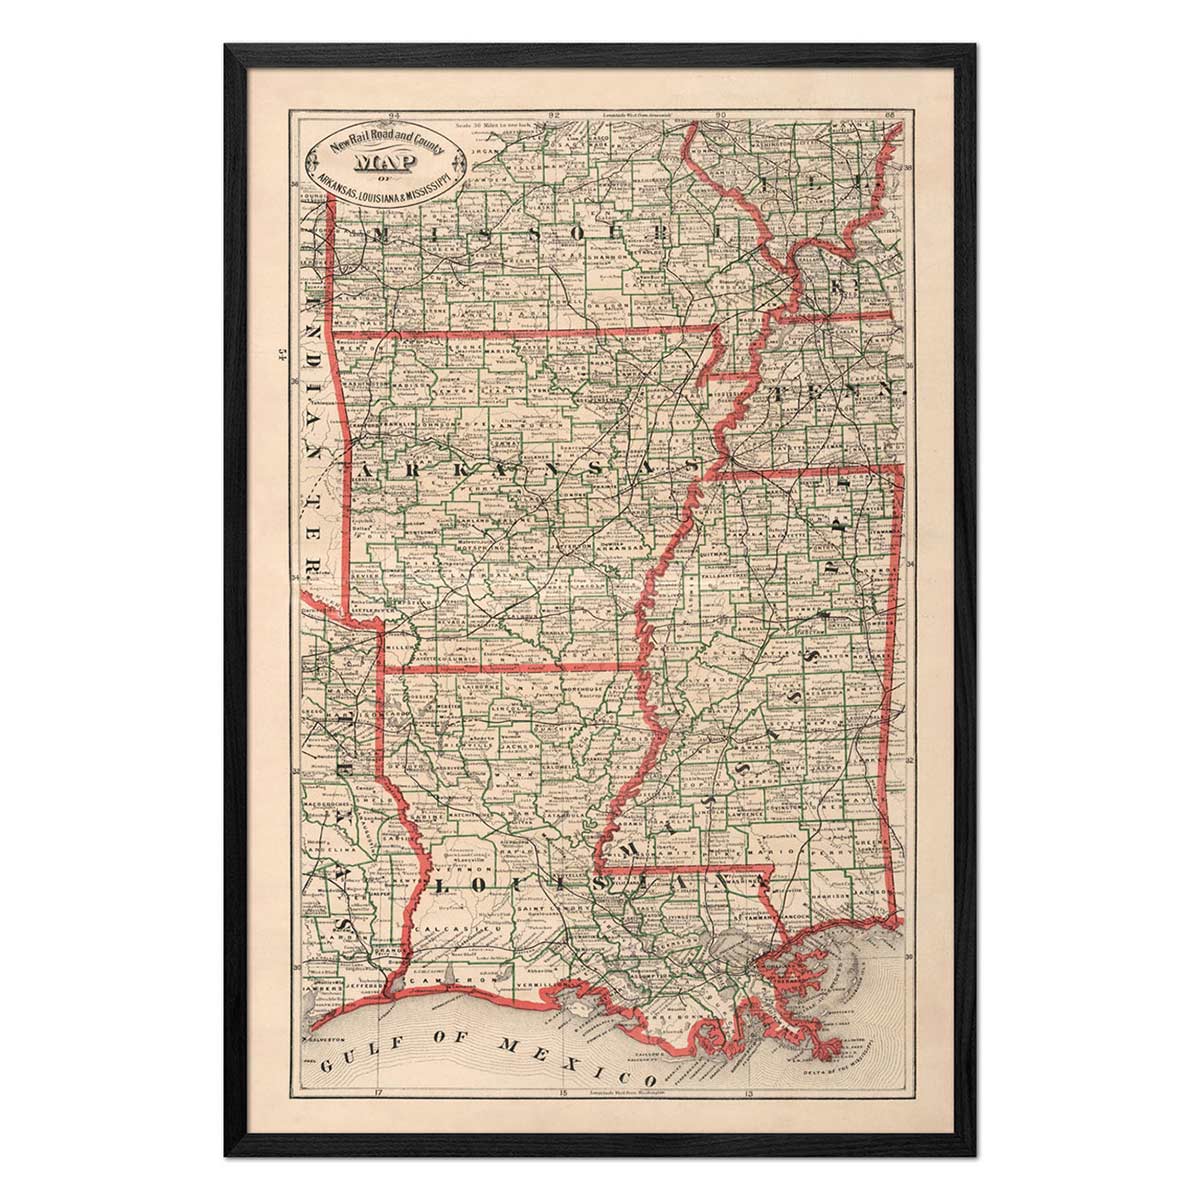 Map of Mississippi, Louisiana & Arkansas. / Burr, David H., 1803-1875 / 1839